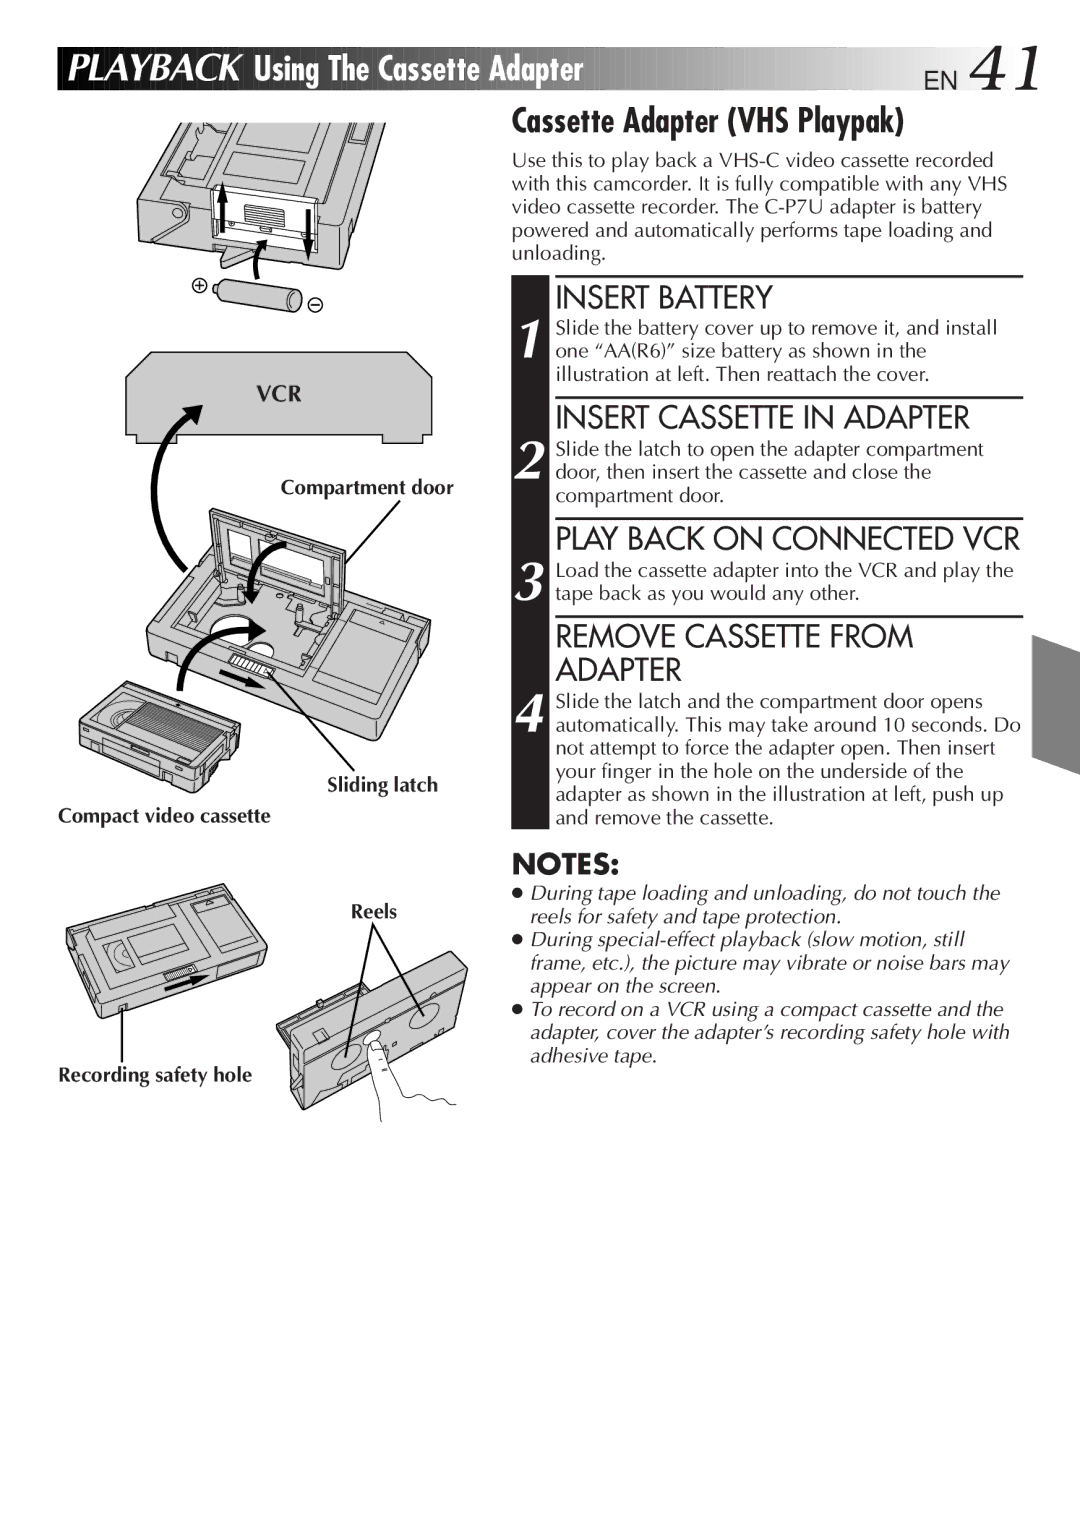 JVC GR-AXM300 manual Using The Cassette Adapter EN, Cassette Adapter VHS Playpak, Insert Cassette in Adapter 